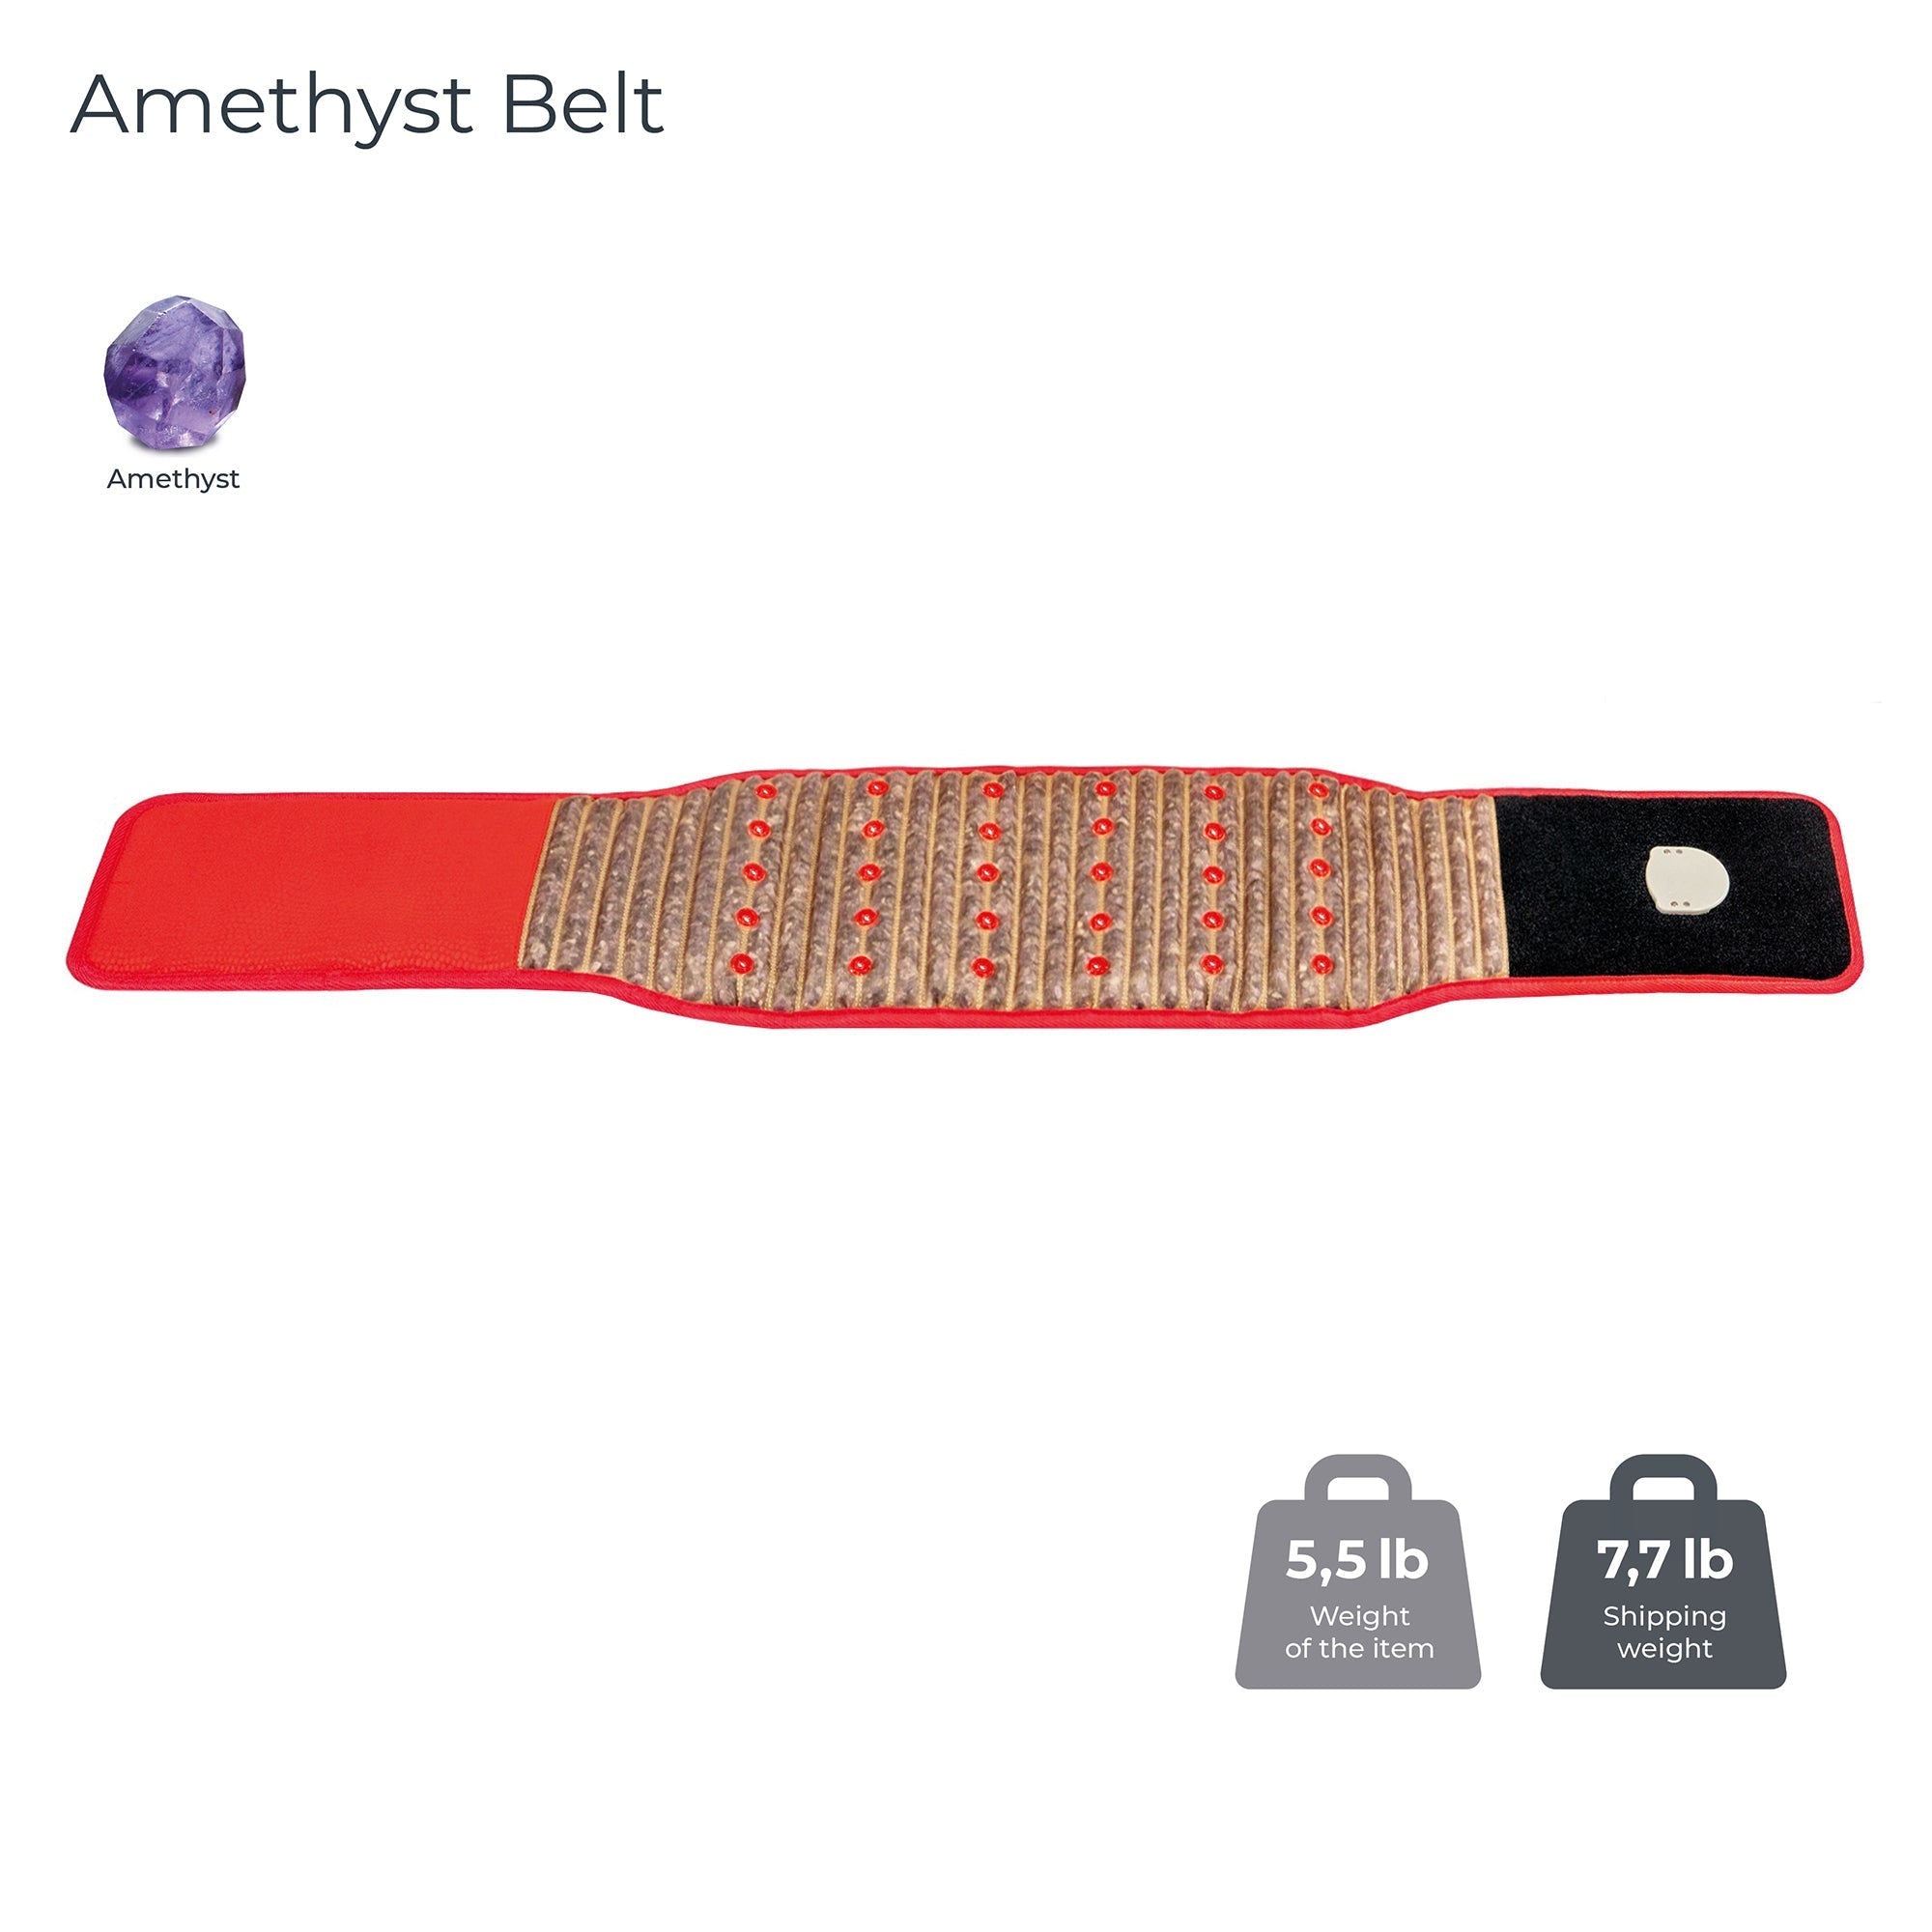 HealthyLine Amethyst Belt Soft - Photon PEMF InfraMat Pro® - Purely Relaxation